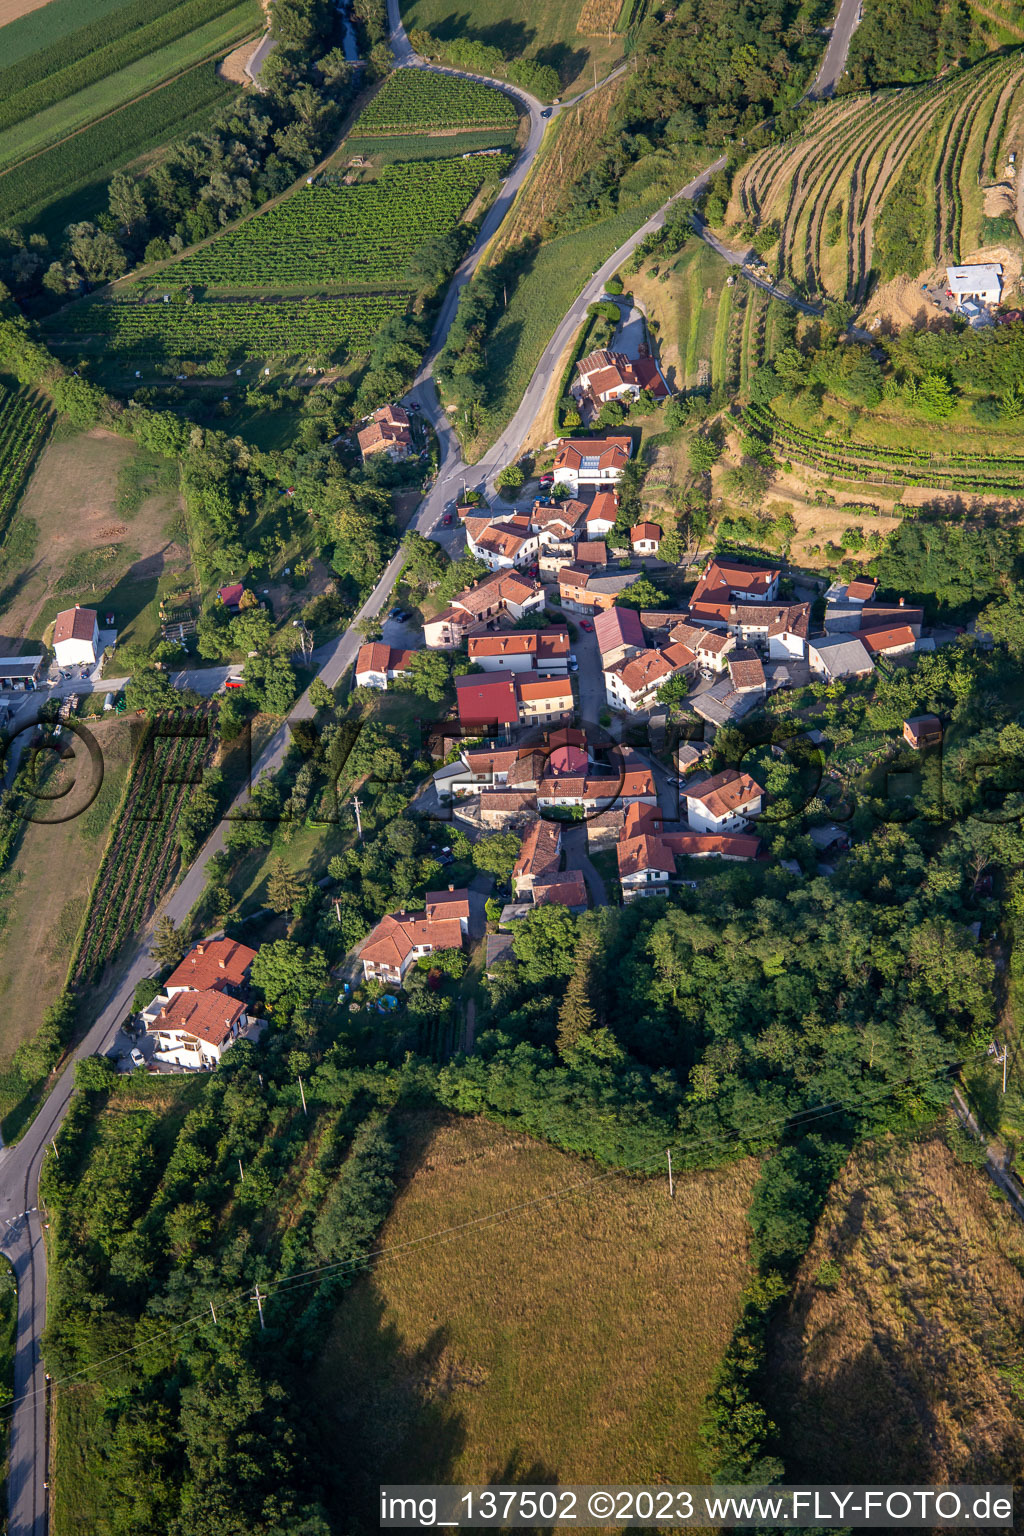 Luftbild von Ortsteil Dolenje in Ajdovščina, Slowenien